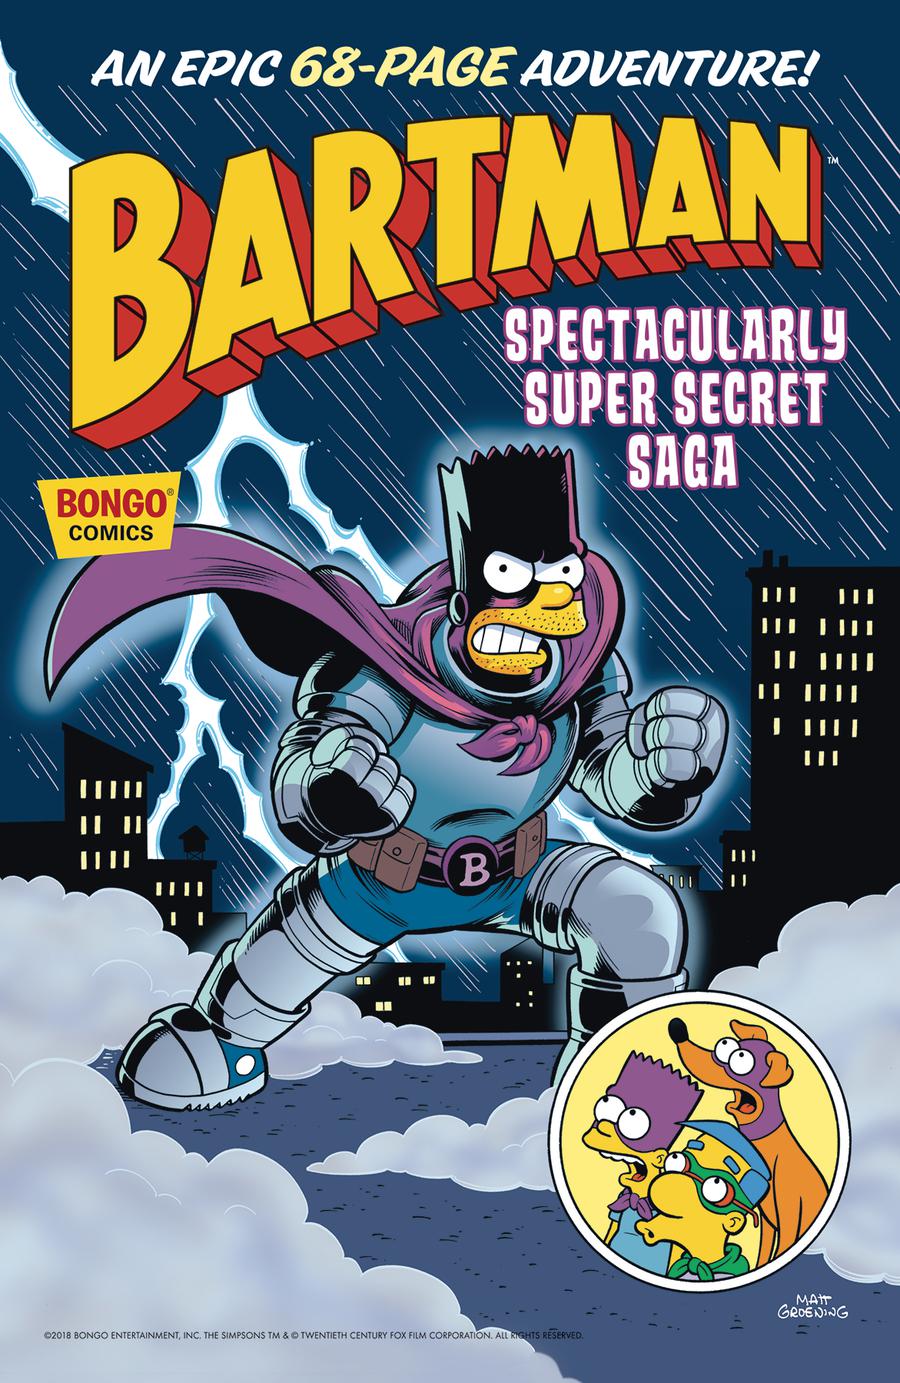 Bartmans Spectaculary Super Secret Saga One Shot